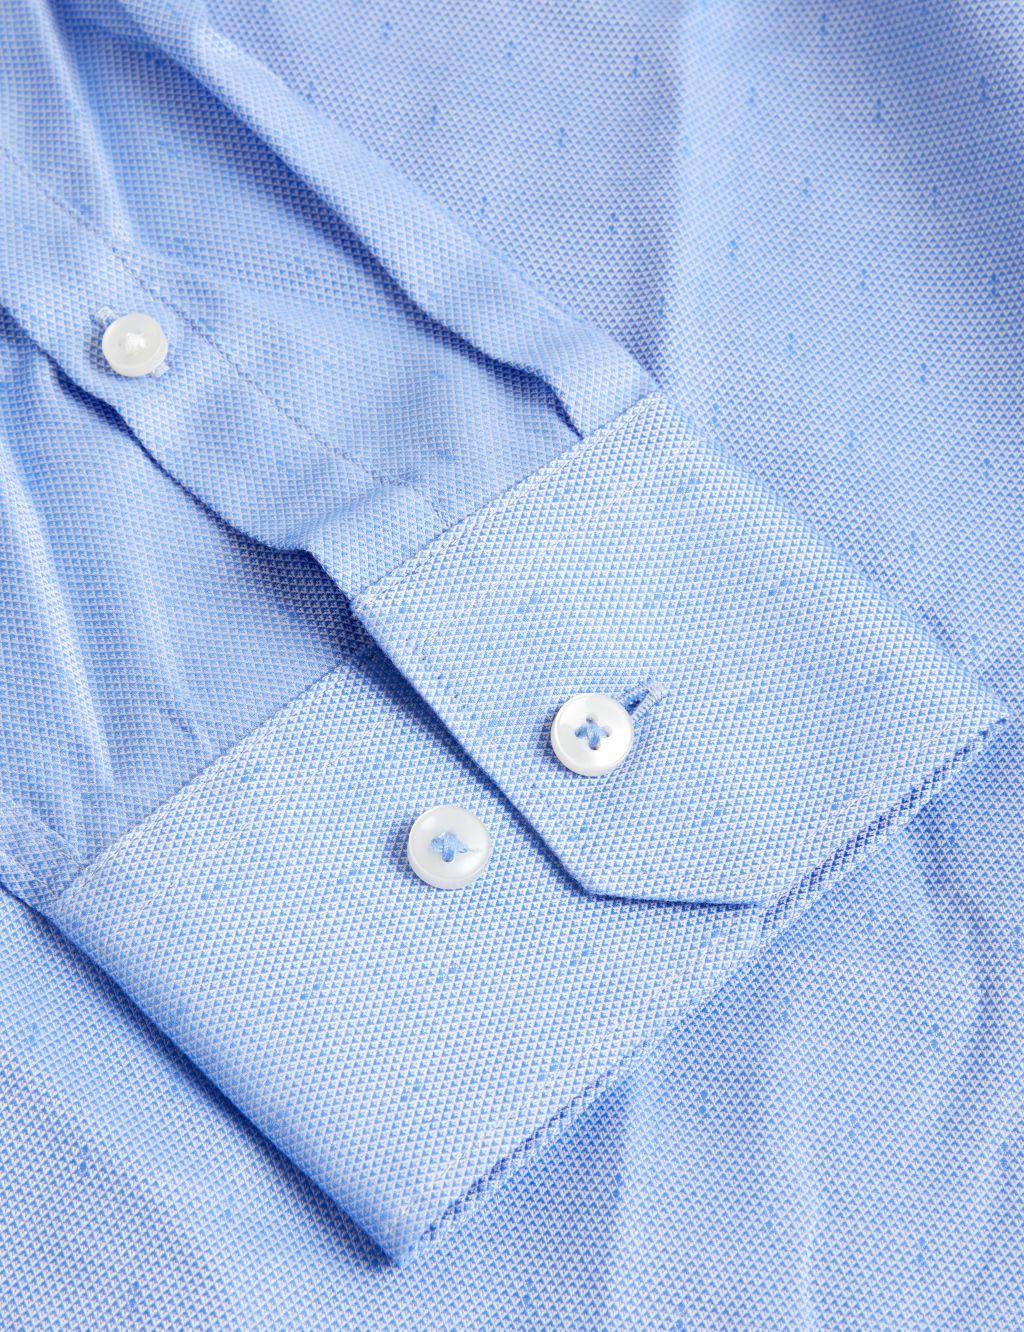 Regular Fit Pure Cotton Textured Shirt image 7